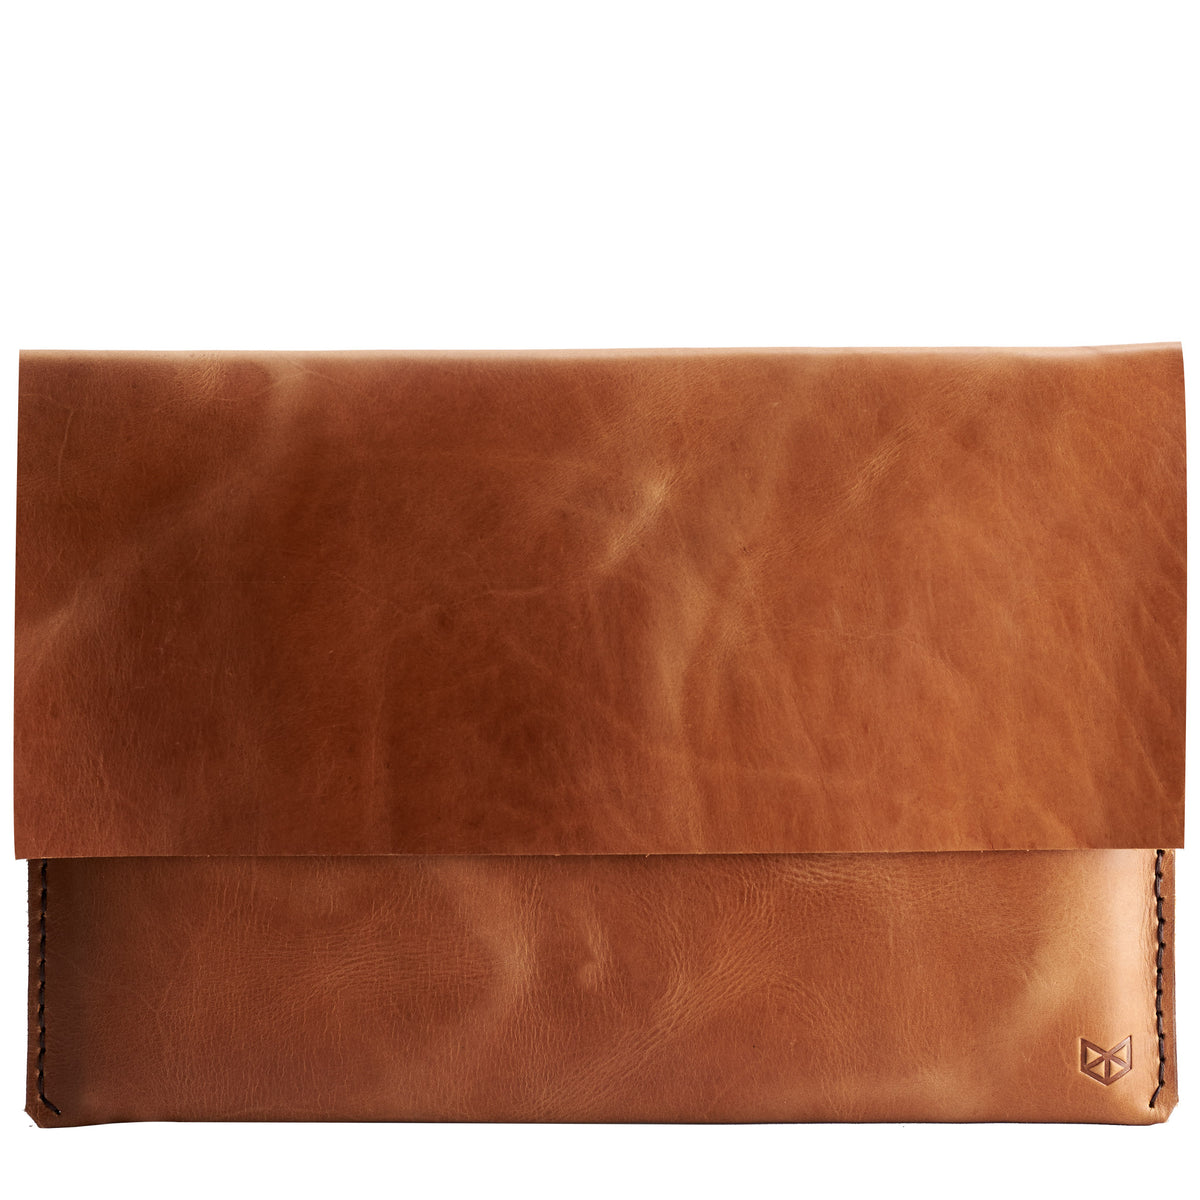 Closed. Tan Leather MacBook Case. MacBook Sleeve by Capra Leather